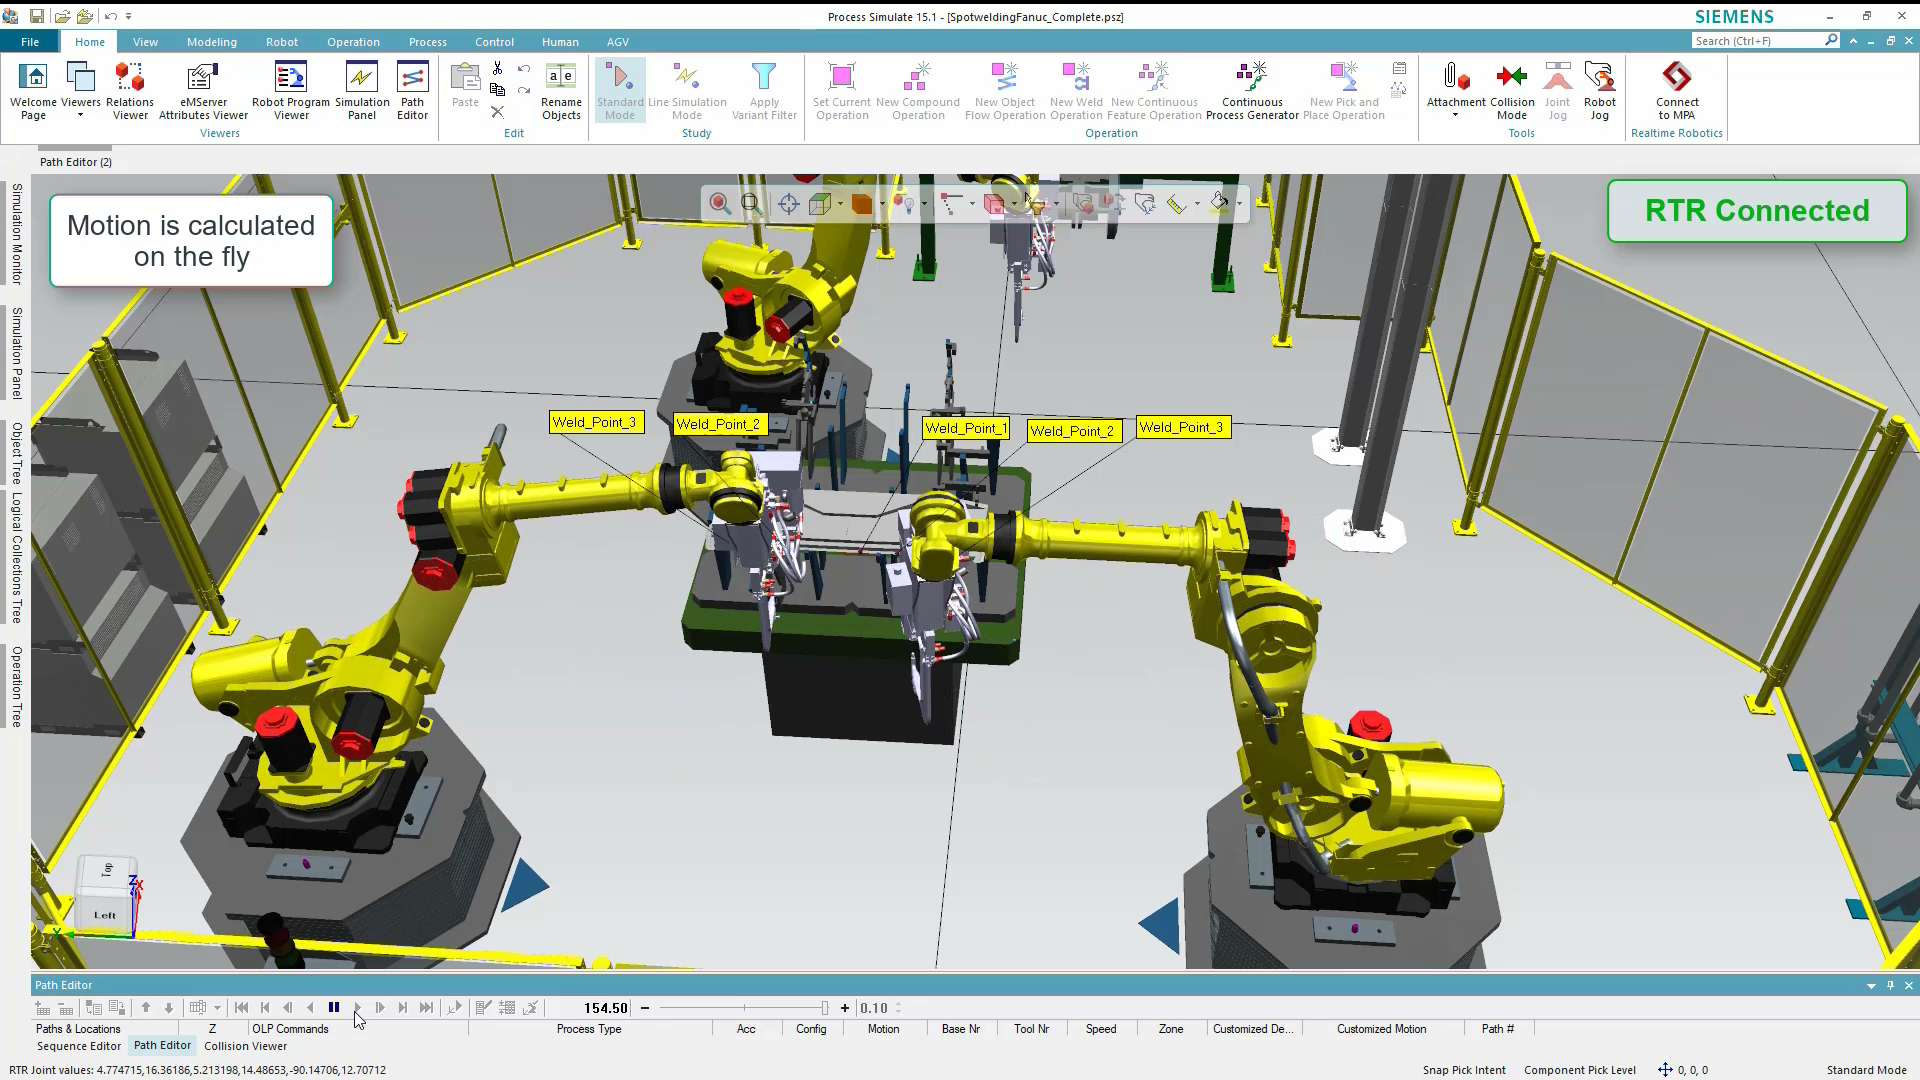 Siemens and Realtime Robotics